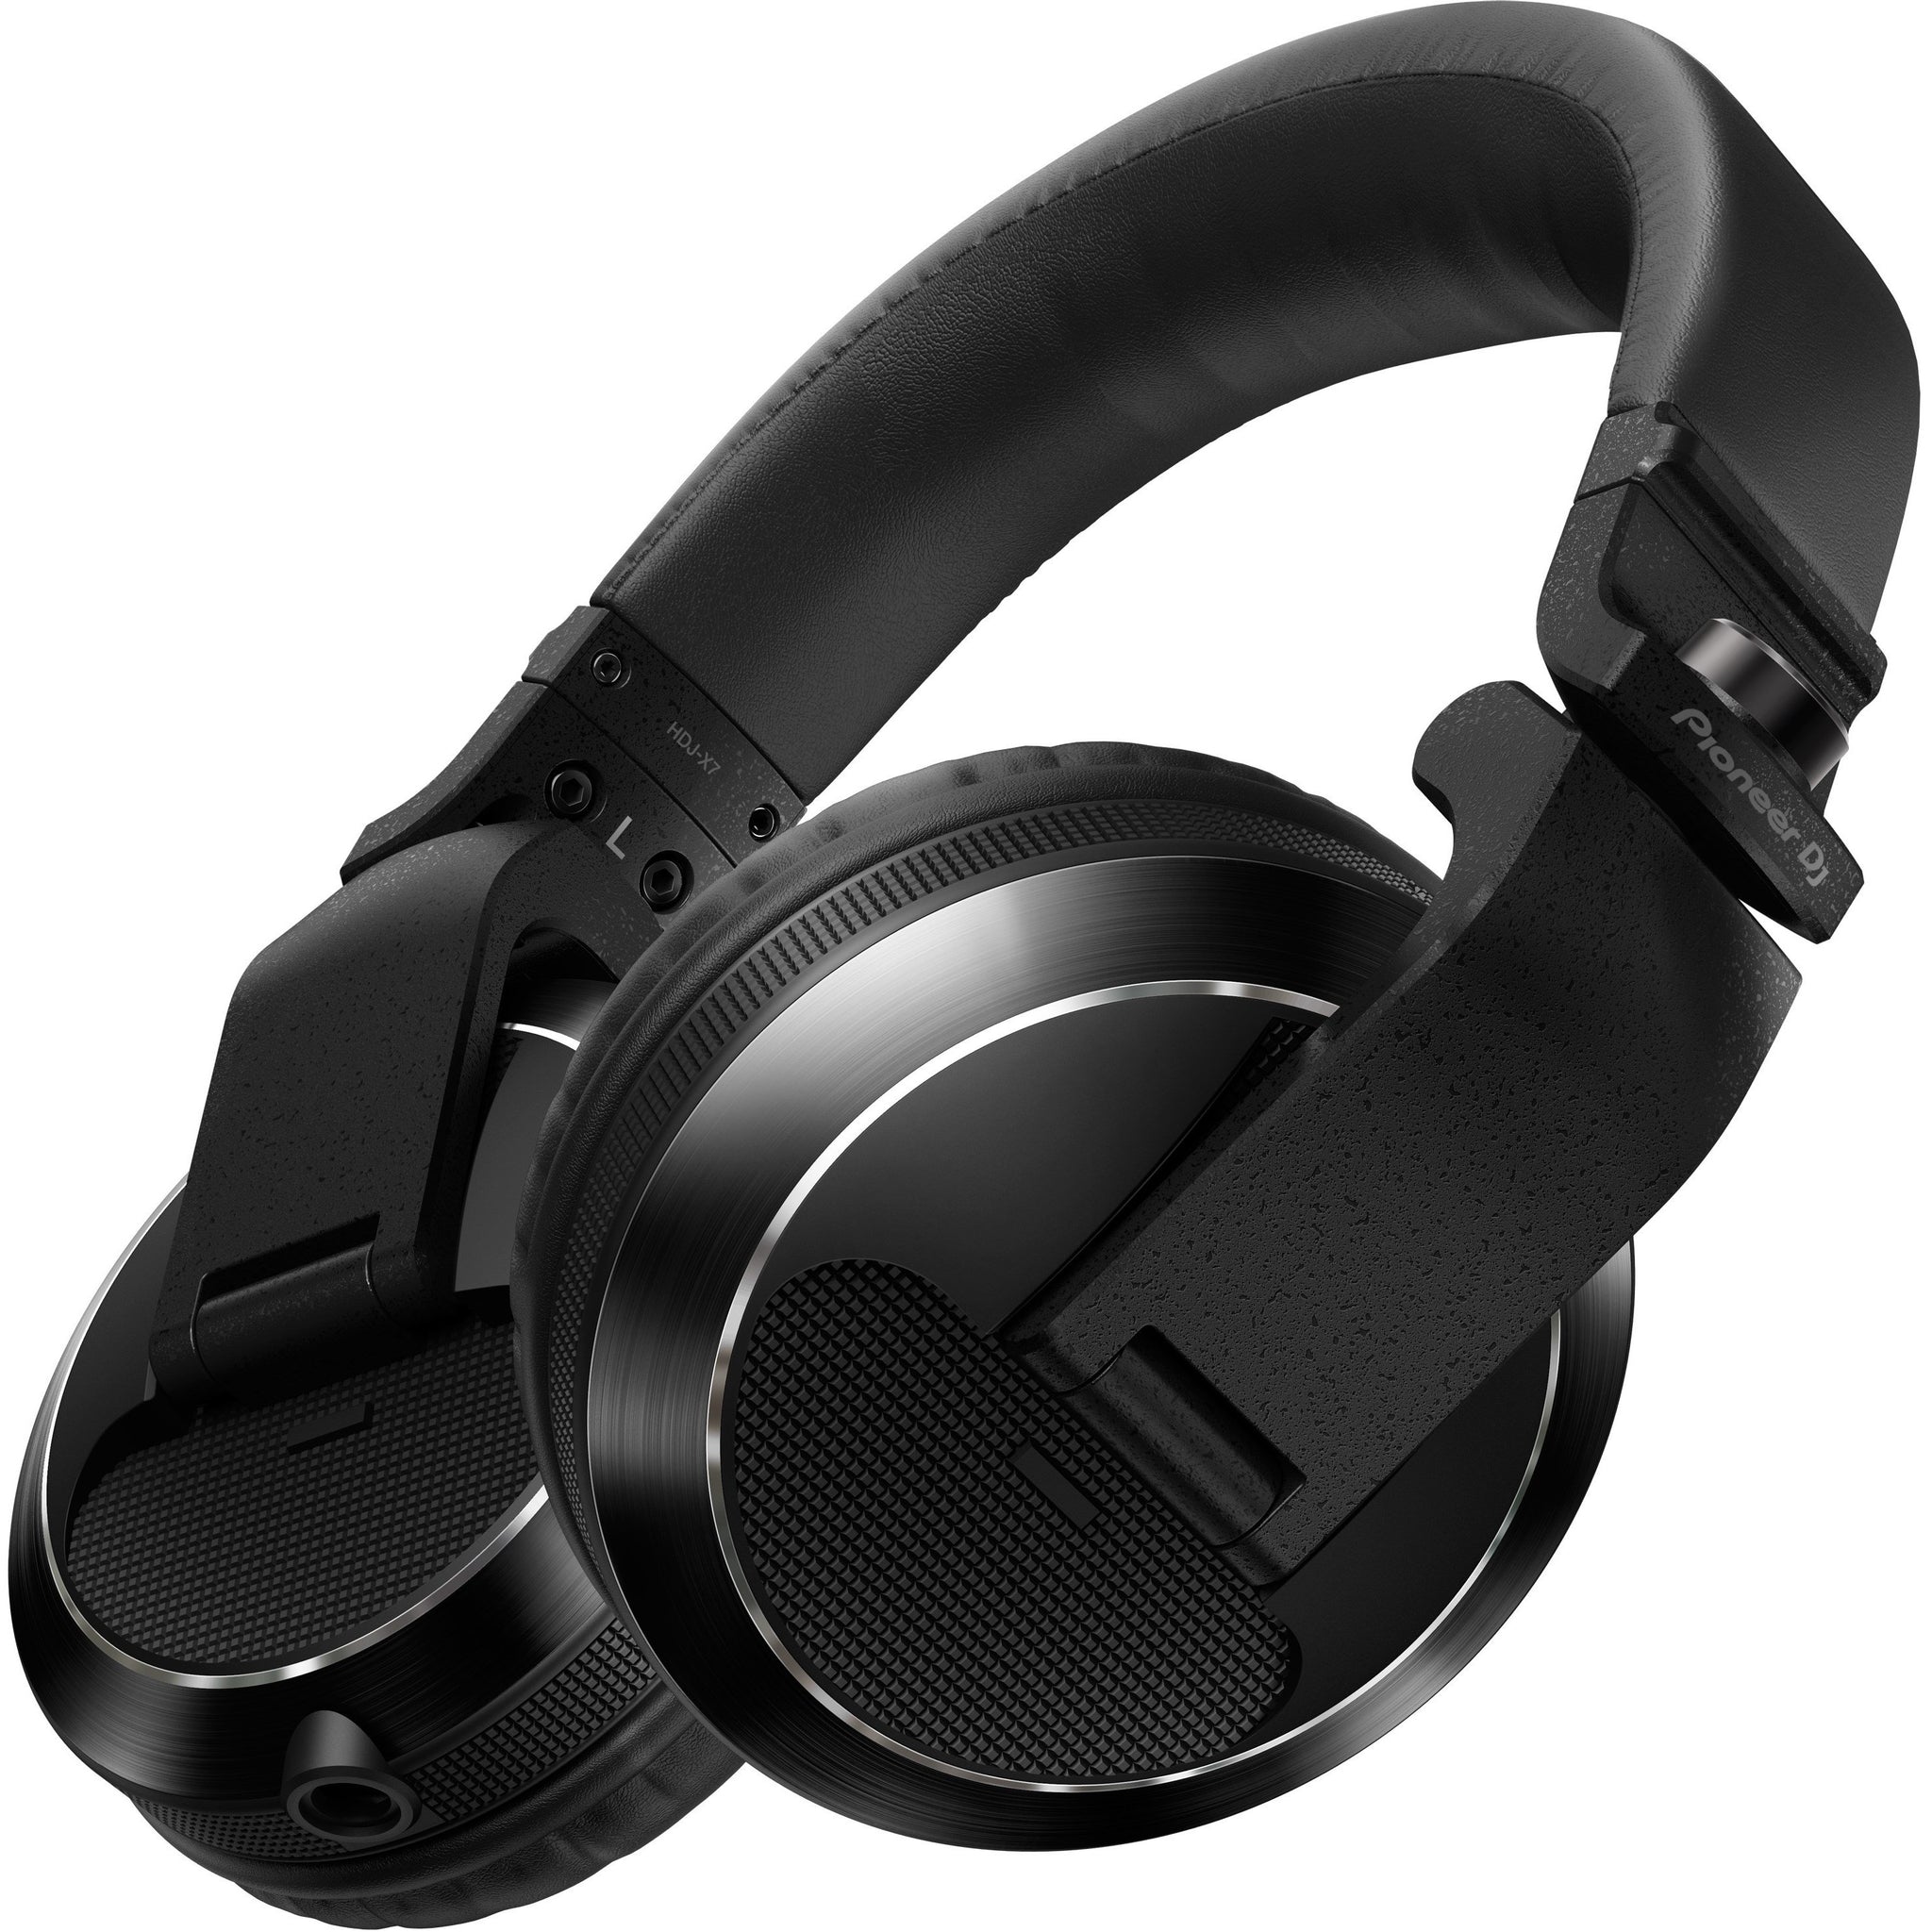 Pioneer HDJ-X7-K Professional Over-Ear DJ Headphone, Black – Easy